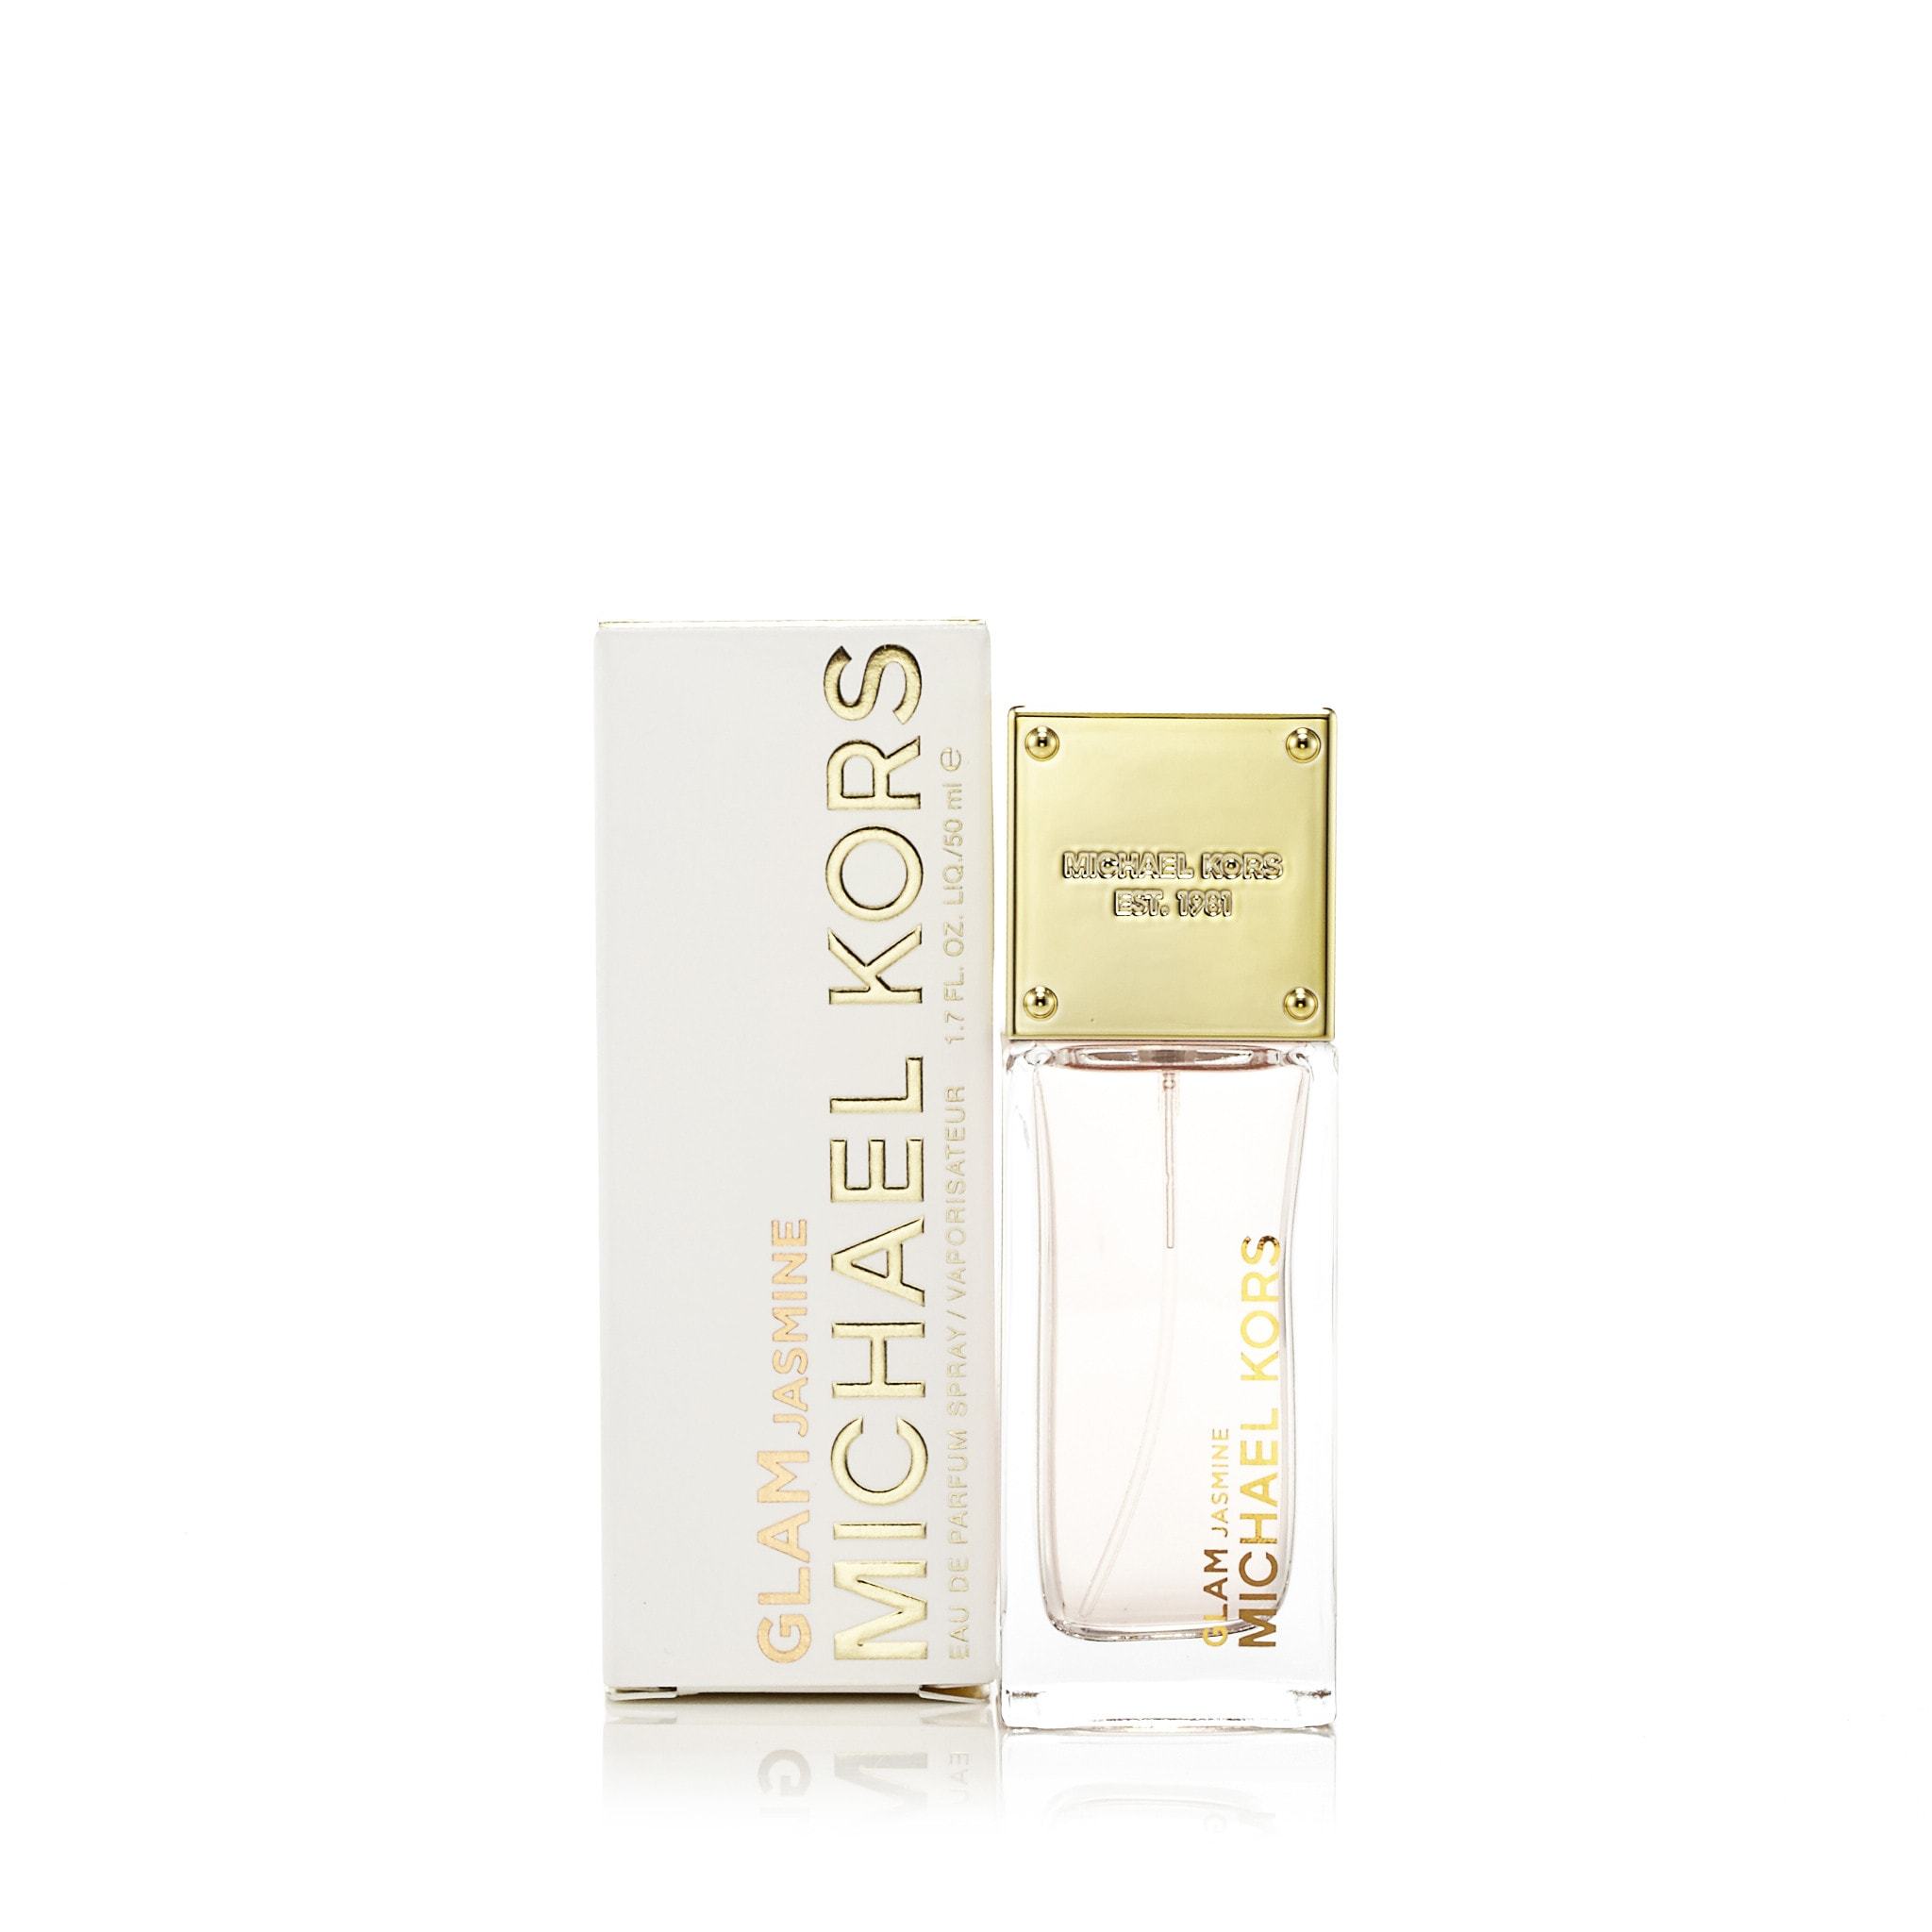 Glam Jasmine Eau de Parfum Spray for Women by Michael Kors Fragrance Outlet